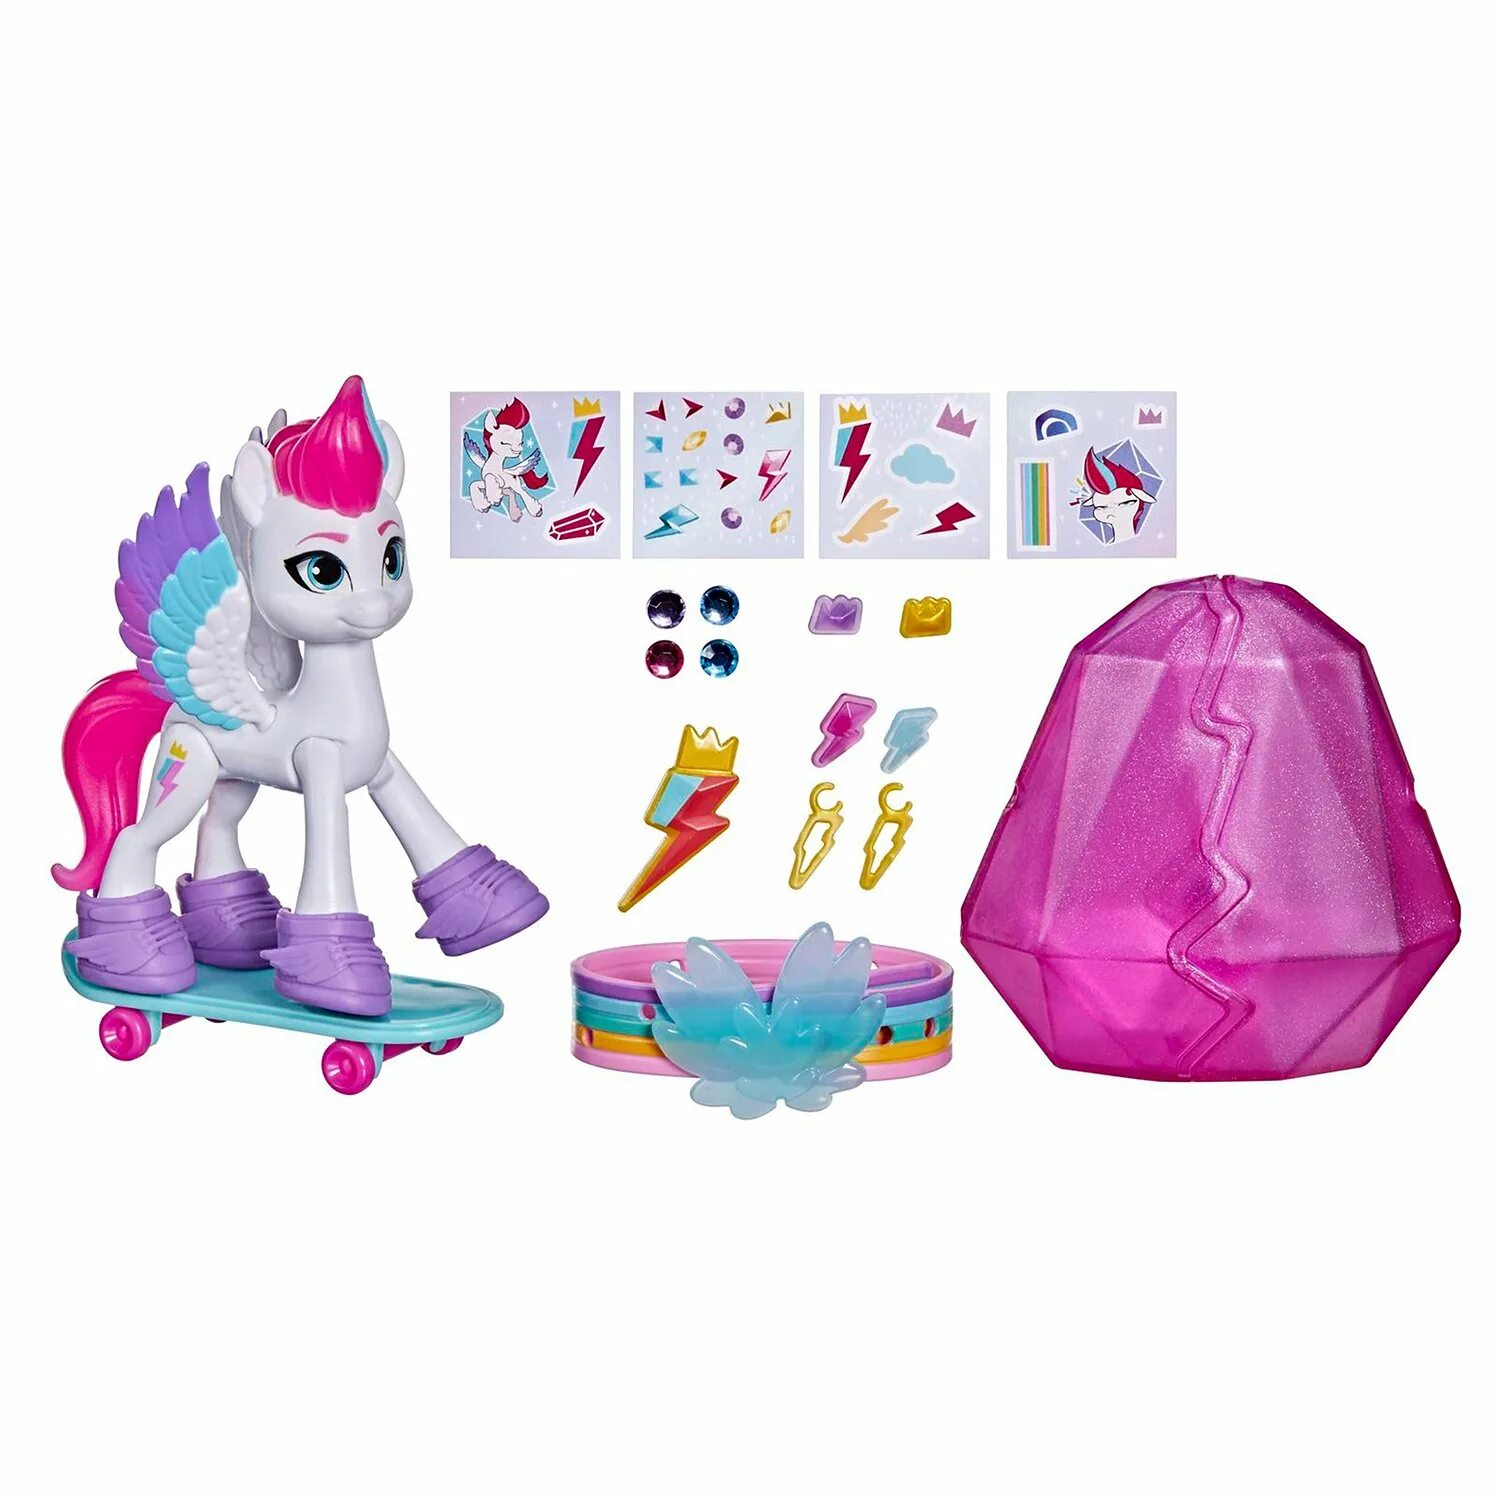 My little pony алмазы. Зипп шторм g5. Игровой набор Hasbro my little Pony (f1785). Зипп МЛП g5.